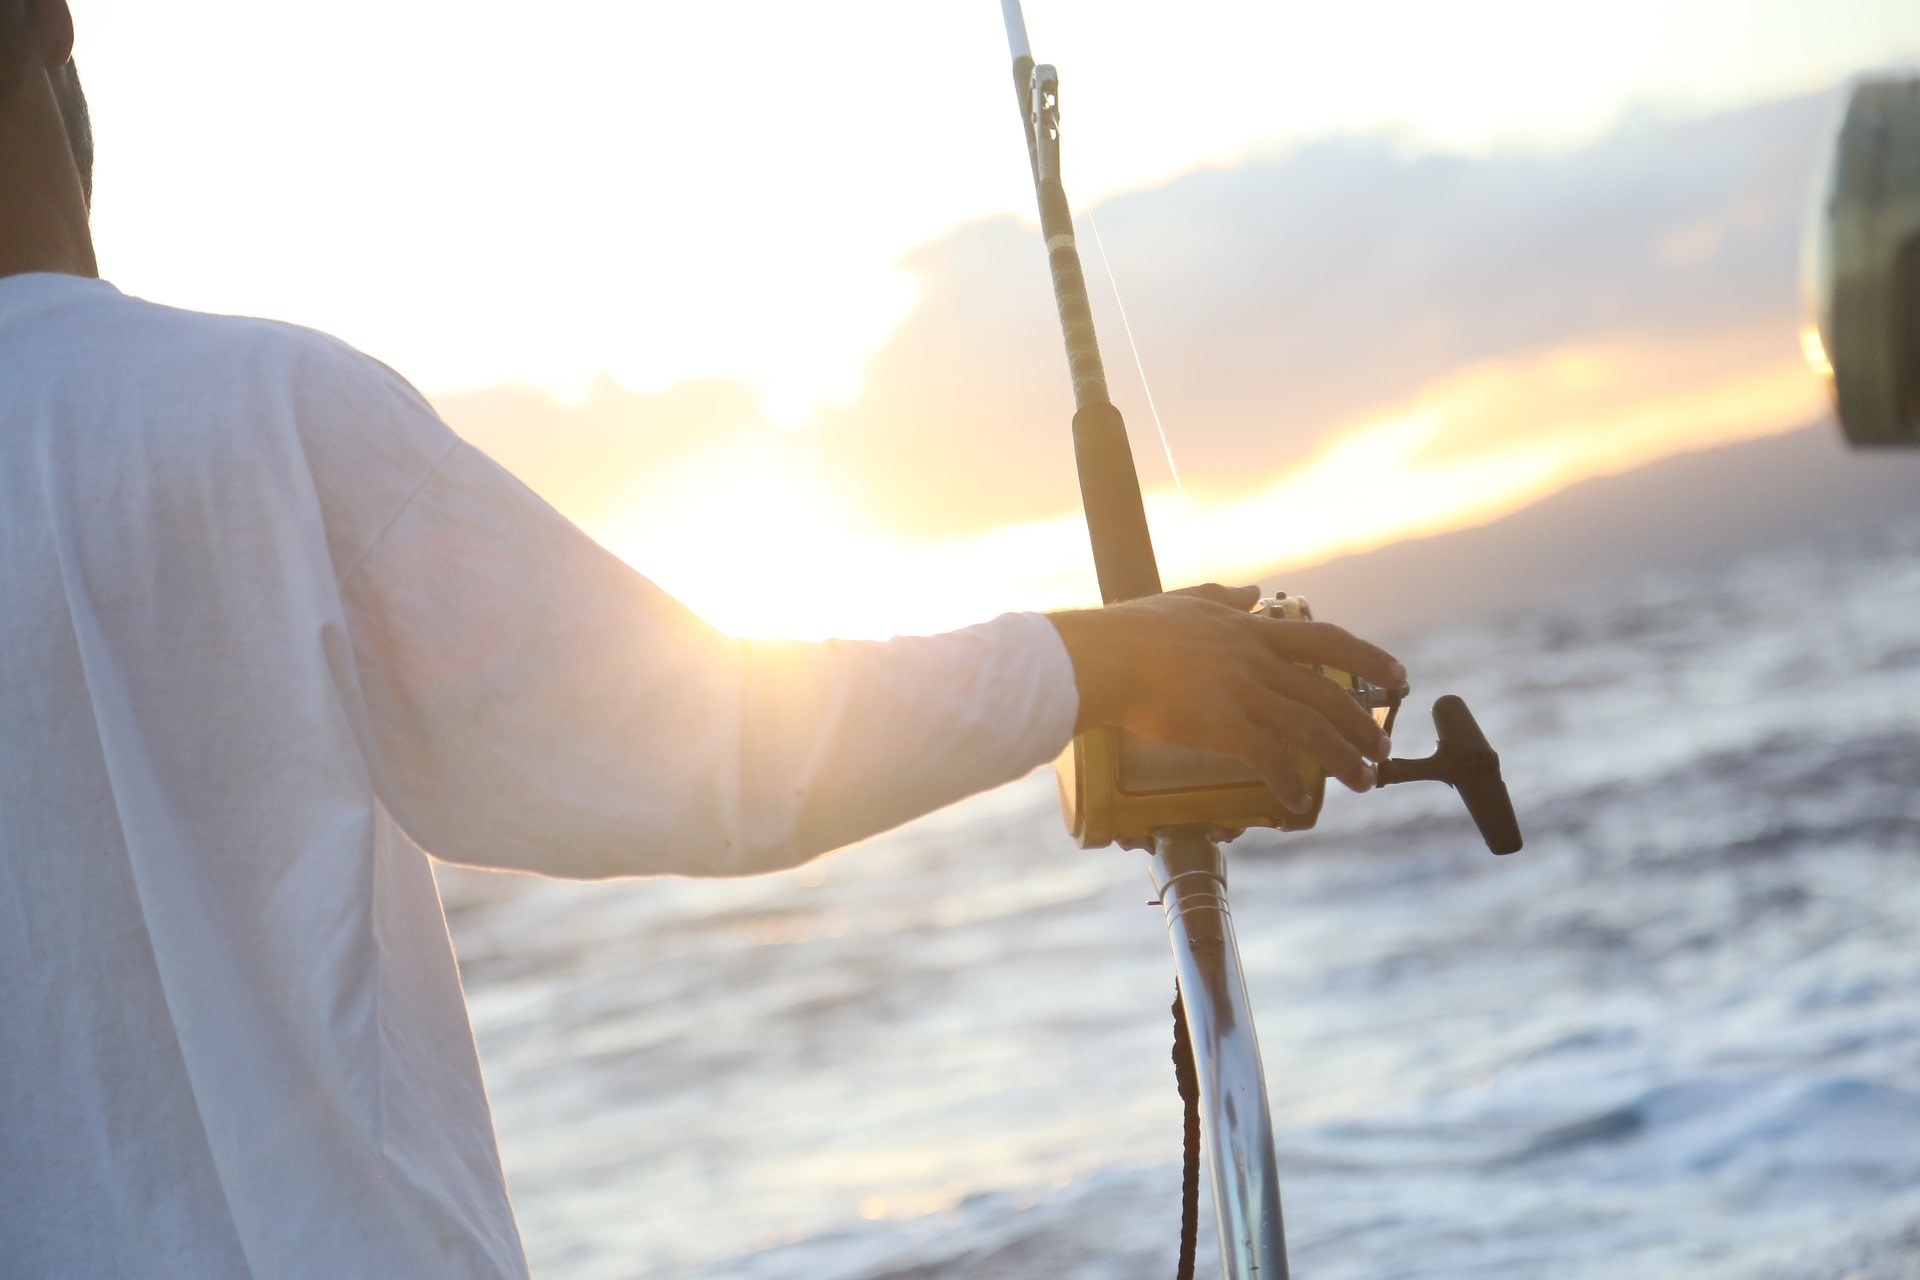 Rosemary Beach Fishing Guide for An Angler's Journey